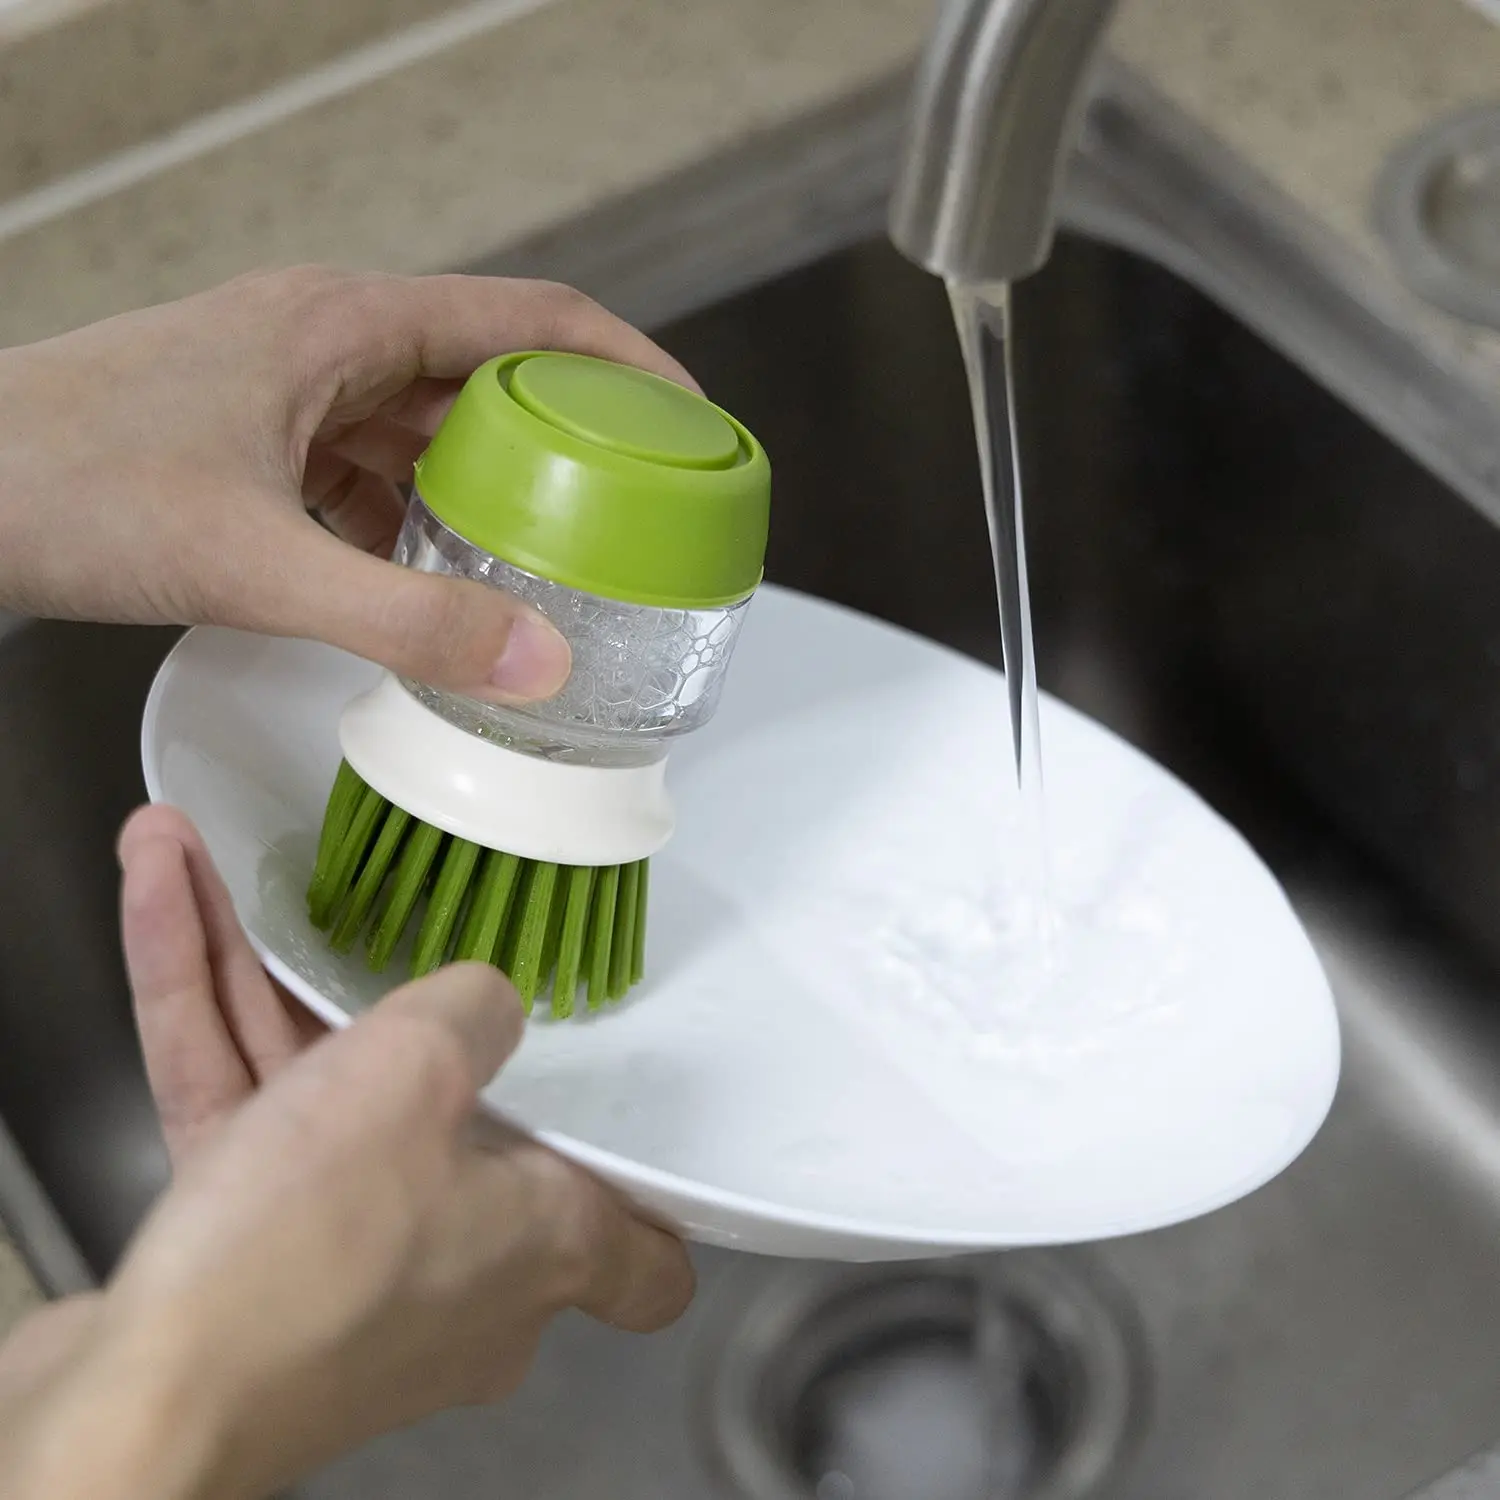 https://ae01.alicdn.com/kf/Se589547e9bdd4517929628d1cd69d1d3J/Soap-Dispensing-Dish-Brush-Soap-Dispensing-Palm-Brush-Dishwashing-Removable-Scrub-Brushes-Dish-Scrubber-with-Holder.jpg